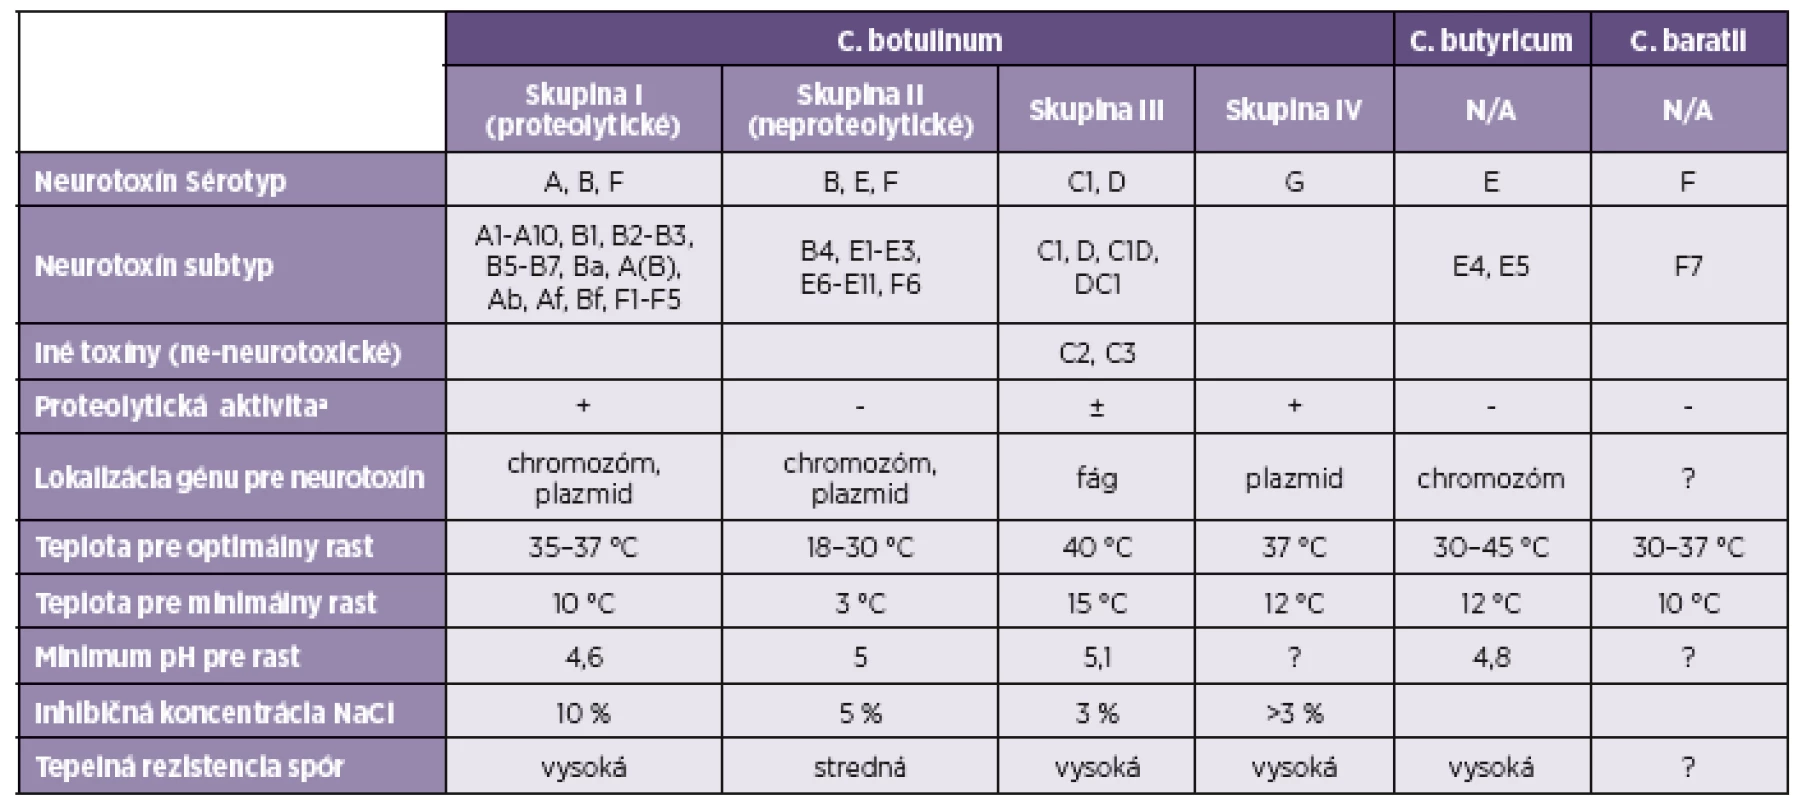 Charakteristiké vlastnosti <i>C. botulinum</i> (skupina I–IV) a toxigénnych kmeňov <i>C. butyricum</i> a <i>C. baratii</i>
Table 1. Characteristic properties of <i>C. botulinum</i> (groups I-IV) and toxigenic strains of <i>C. butyricum</i> and <i>C. baratii</i>